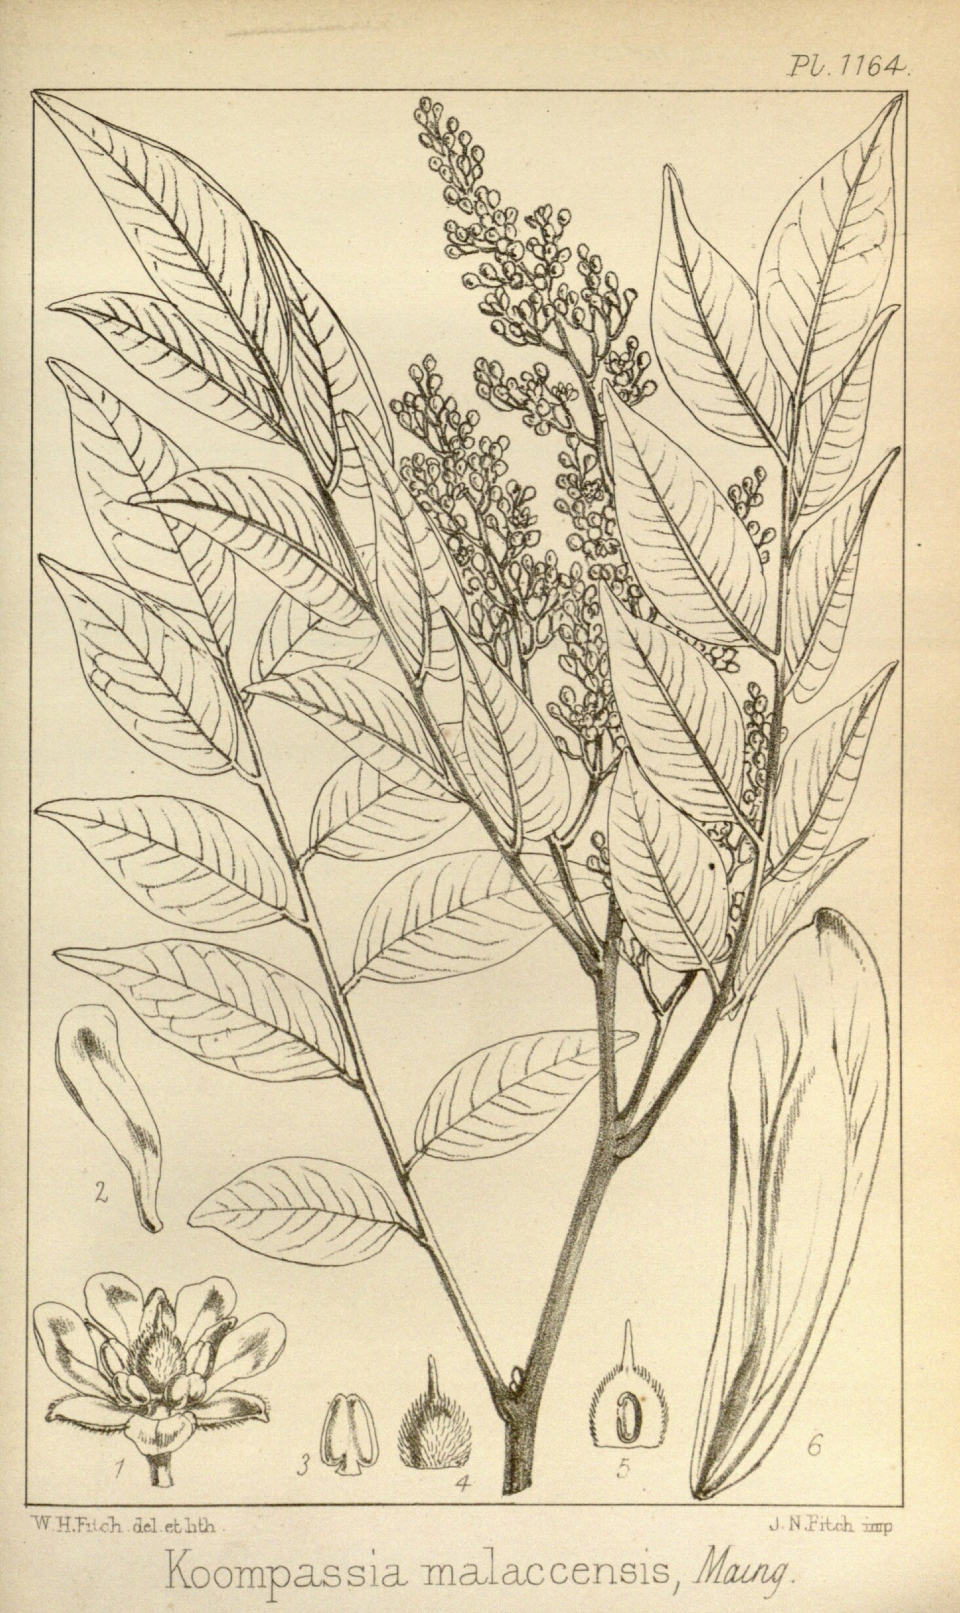 Koompassia malaccensis